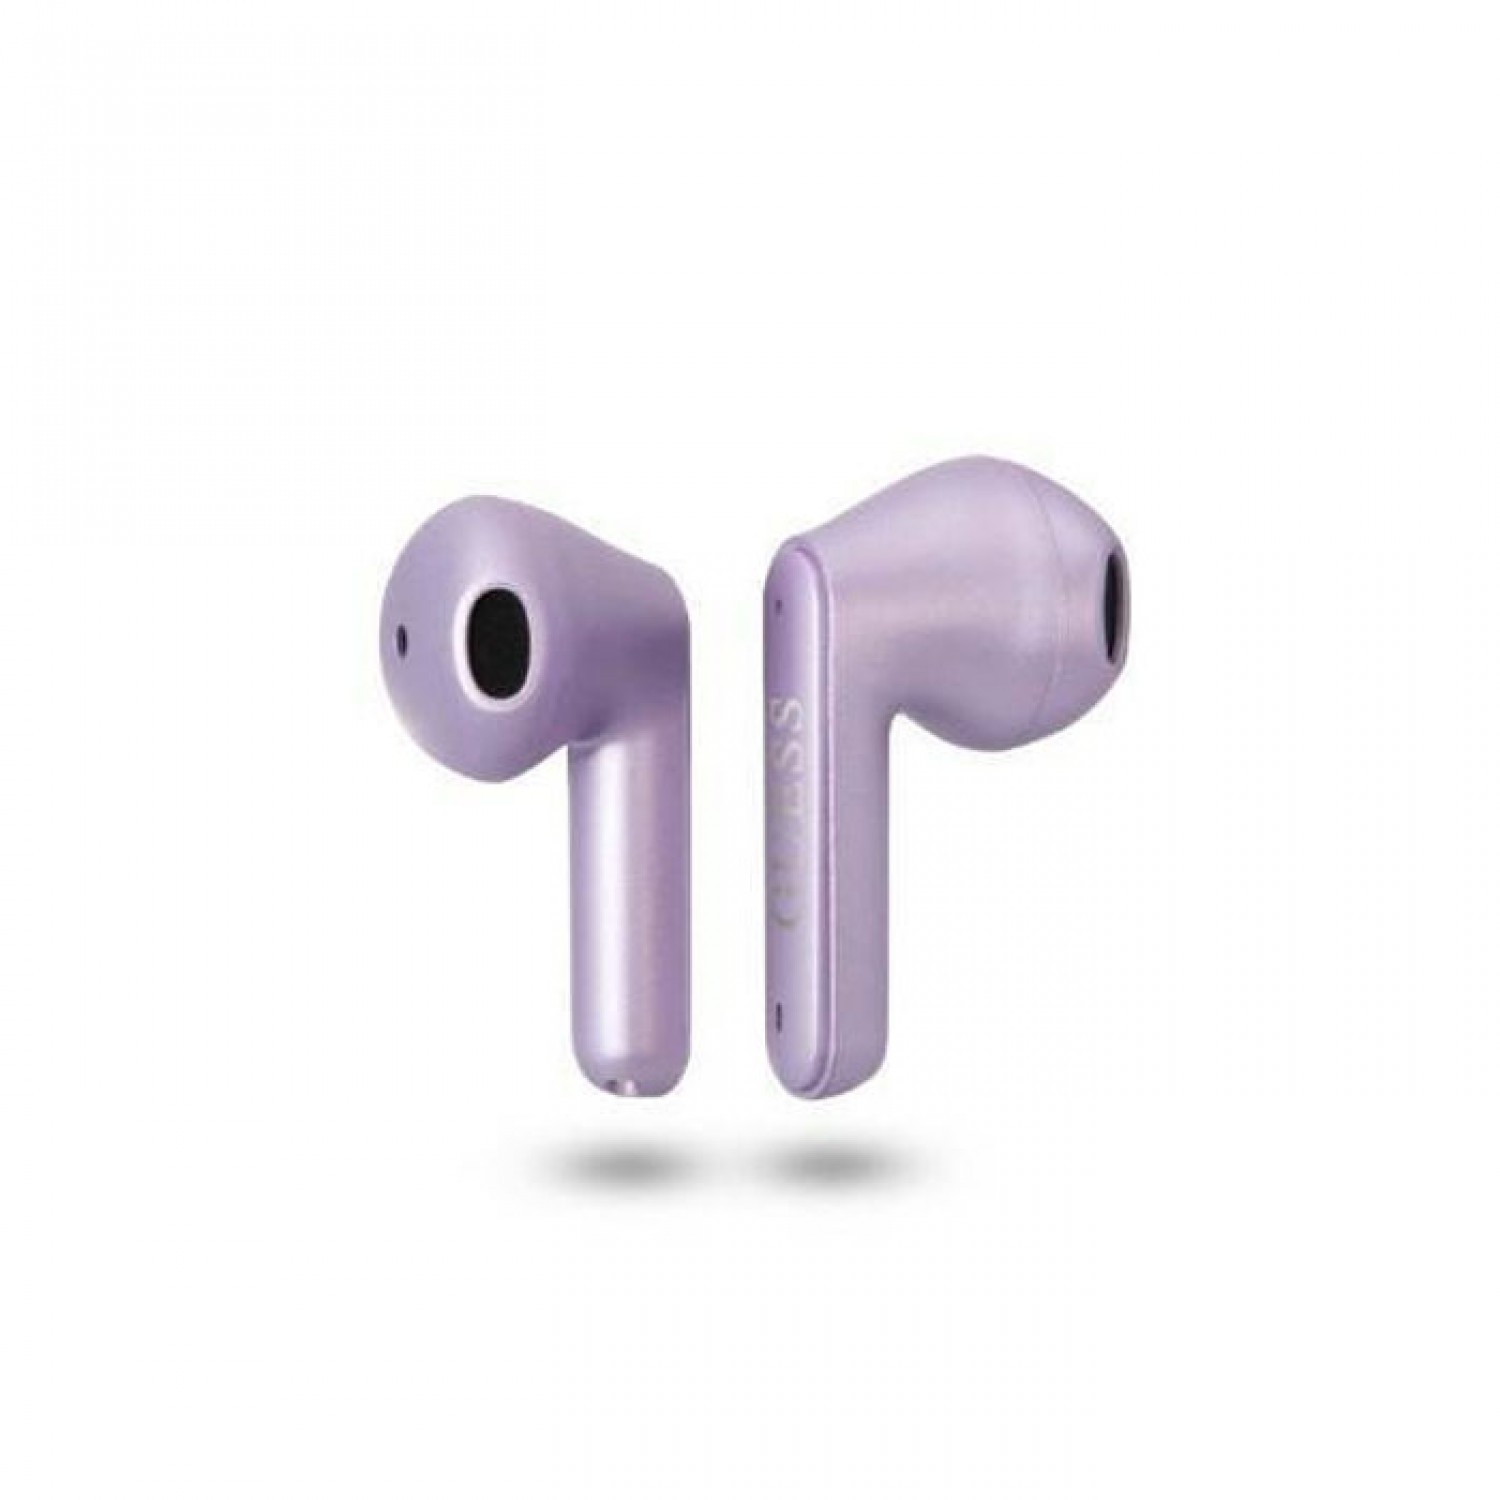 Guess Triangle Logo Earbud Bluetooth Handsfree Ακουστικά με Θήκη Φόρτισης Μωβ